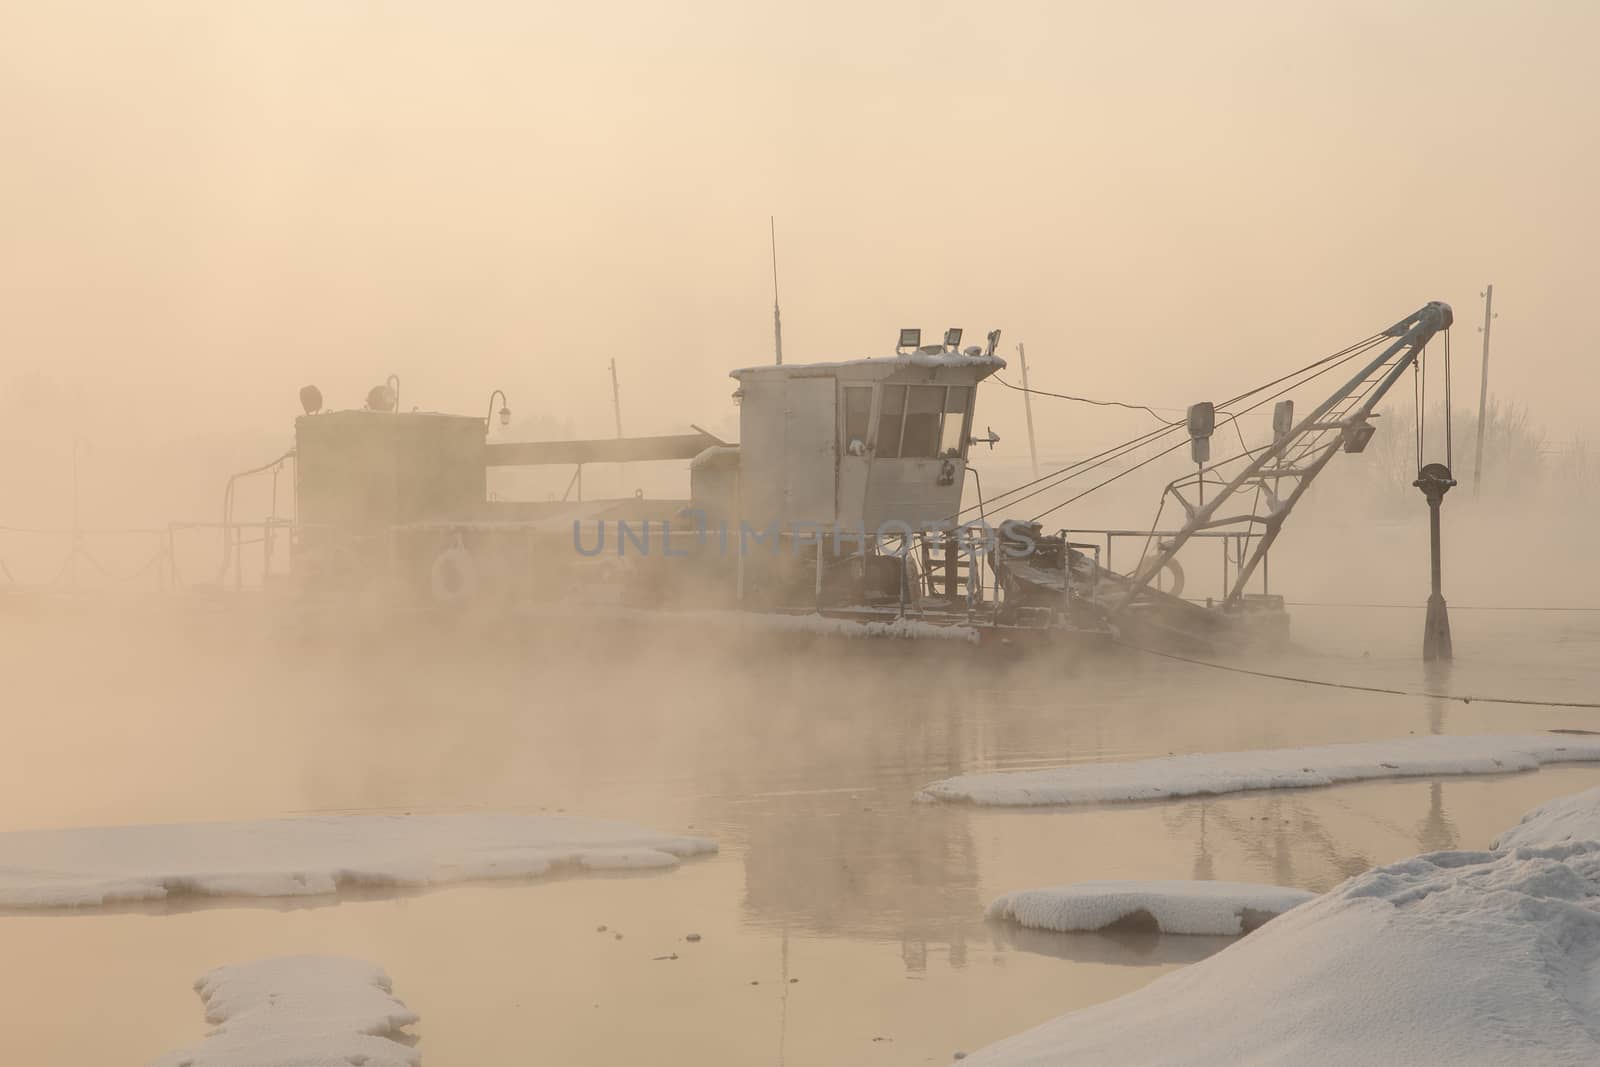 a dredger boat in winter mist at sunset